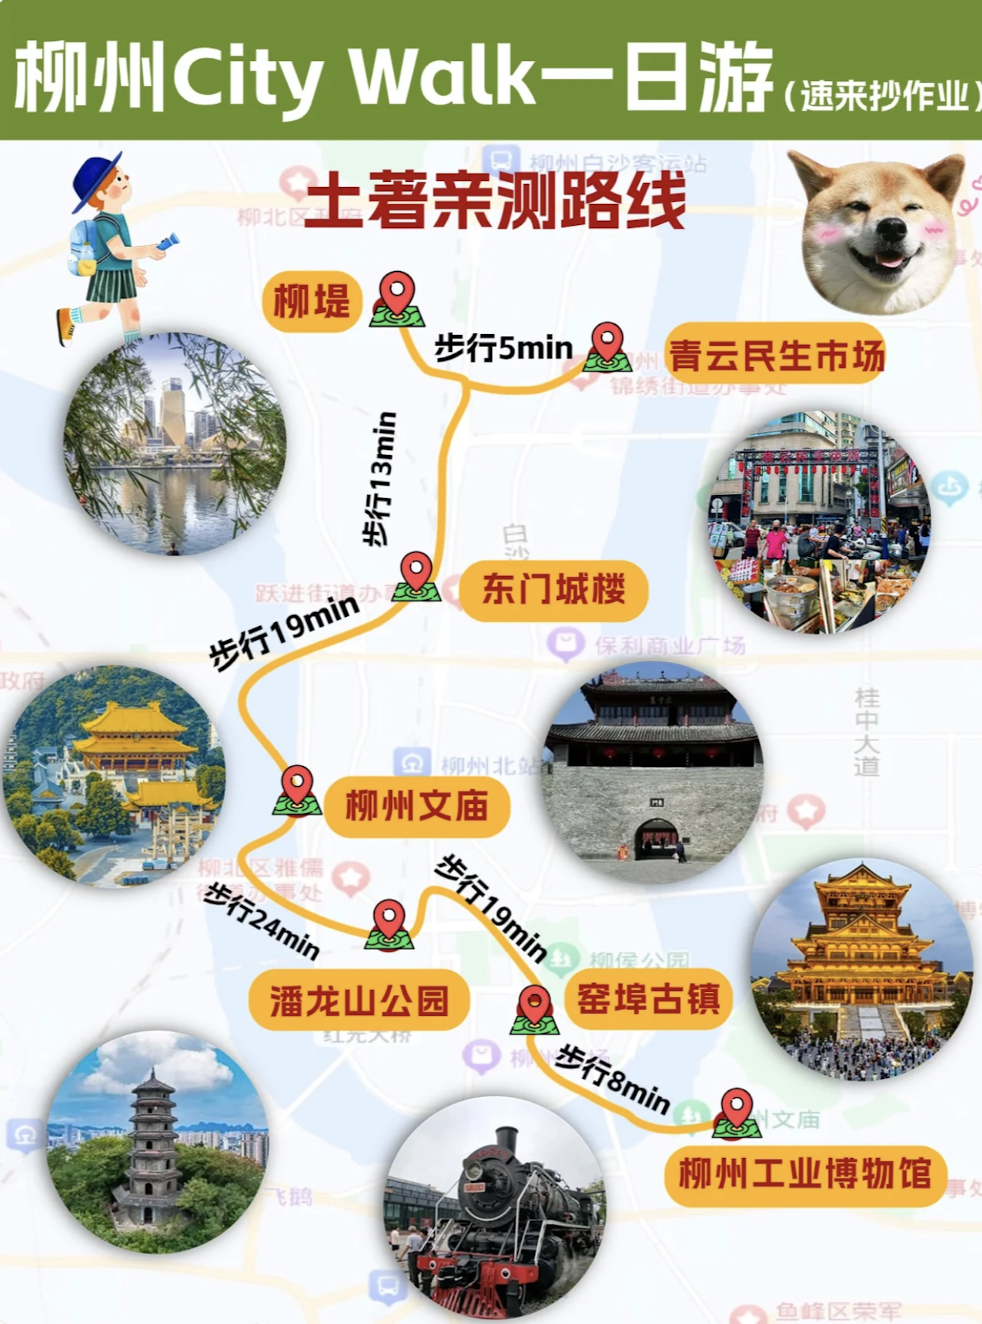 柳州city walk路線（圖源：小紅書@daidai在路上）